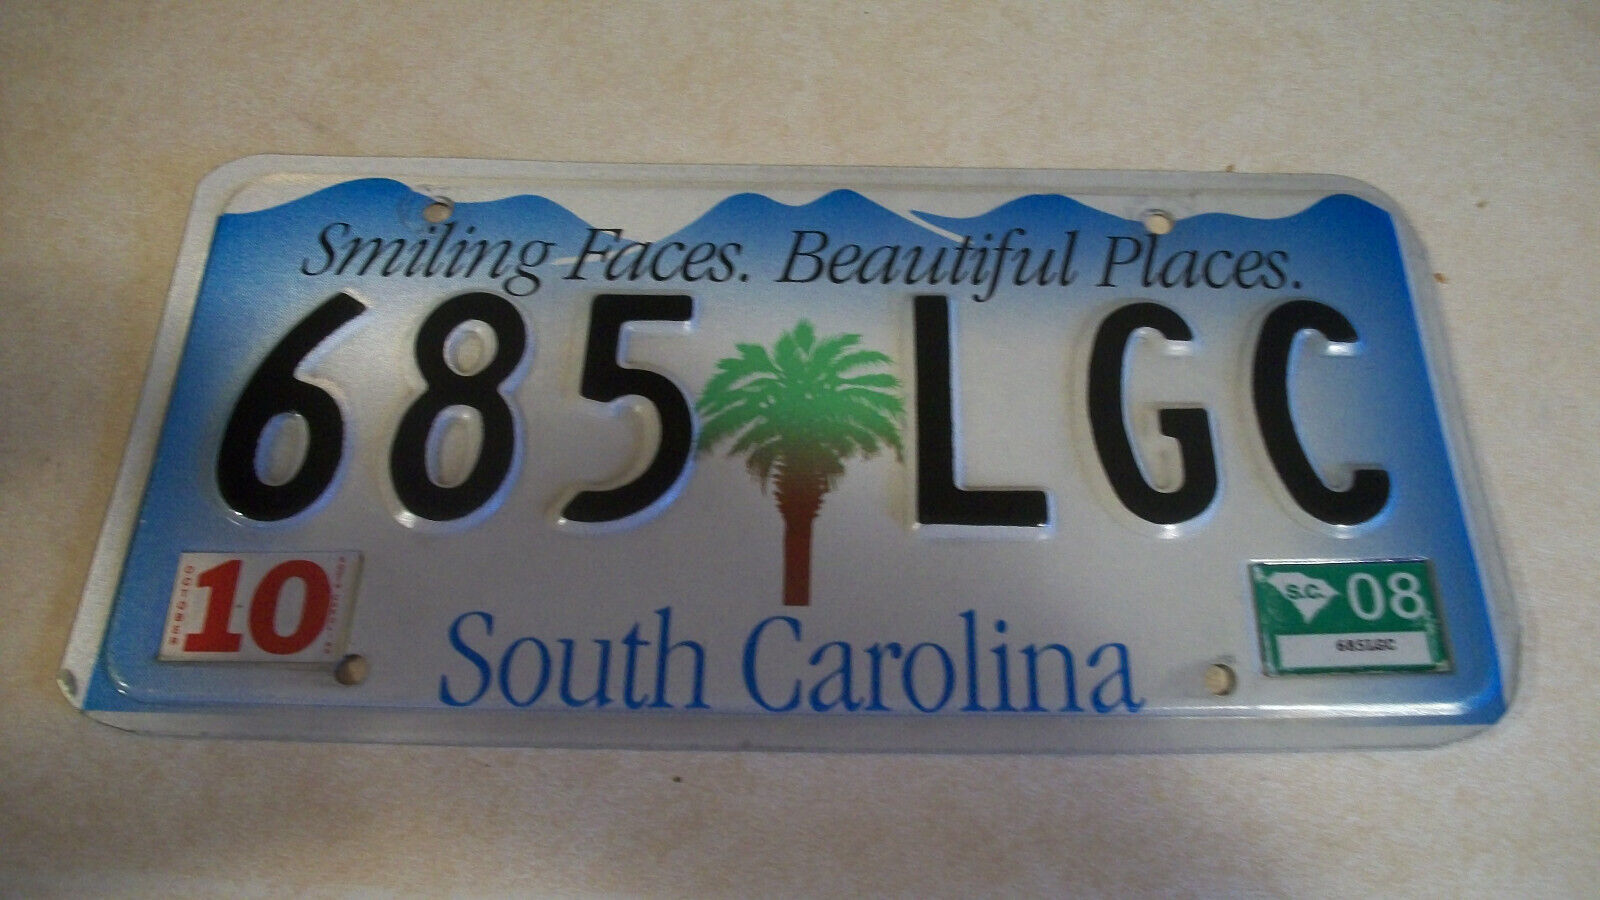 2008 South Carolina license plate